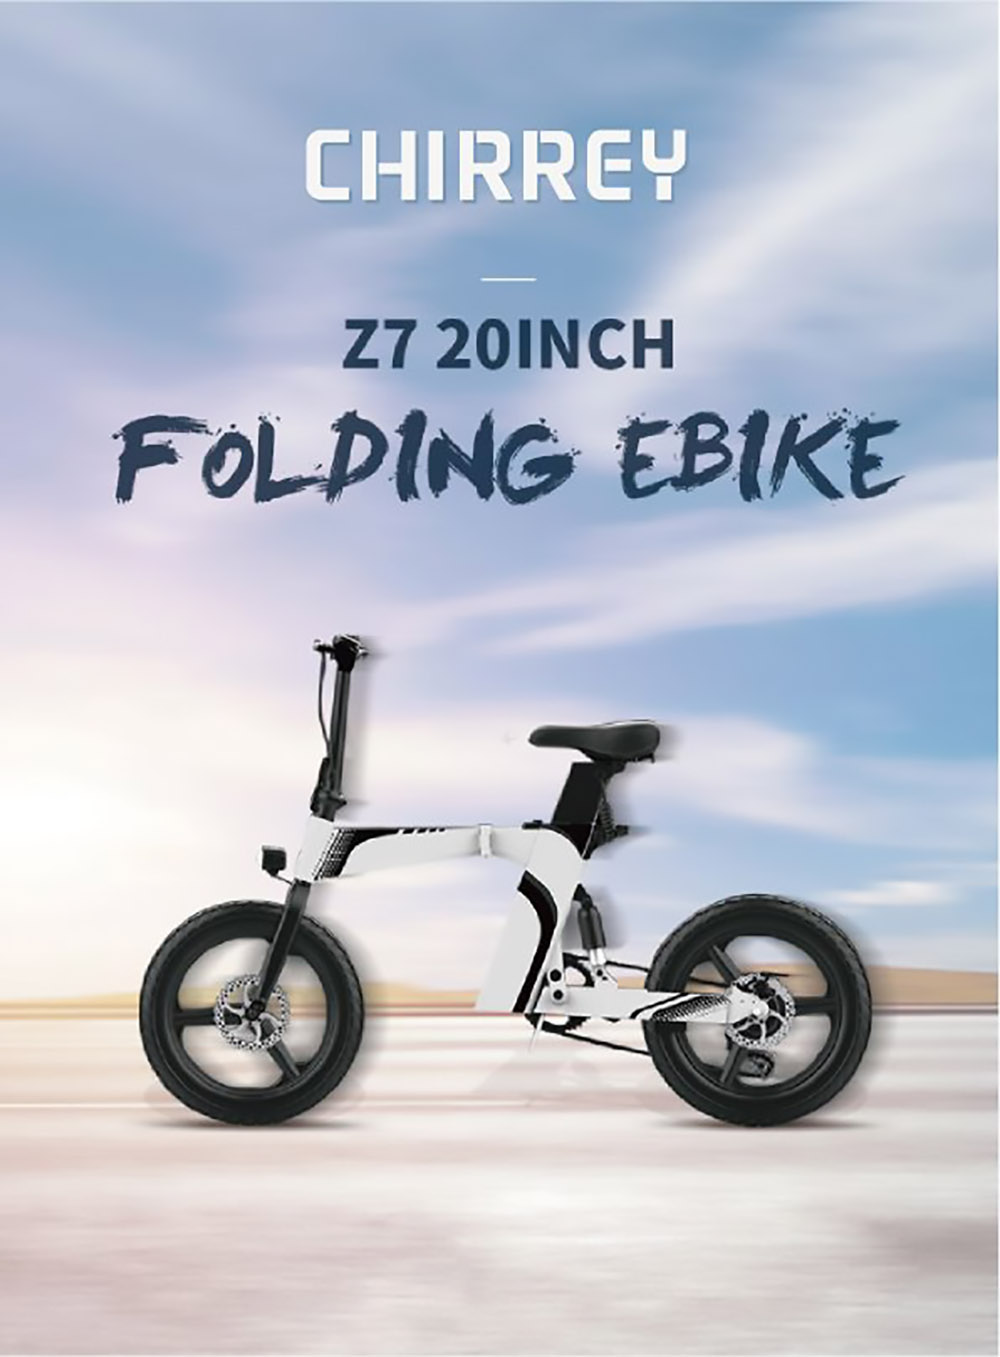 Z7 Electric Bike 250W Brushless Motor 36V 8Ah Battery 20'' Tire, 25km/h Max Speed, 30-40km Range, 120kg Load  - Orange